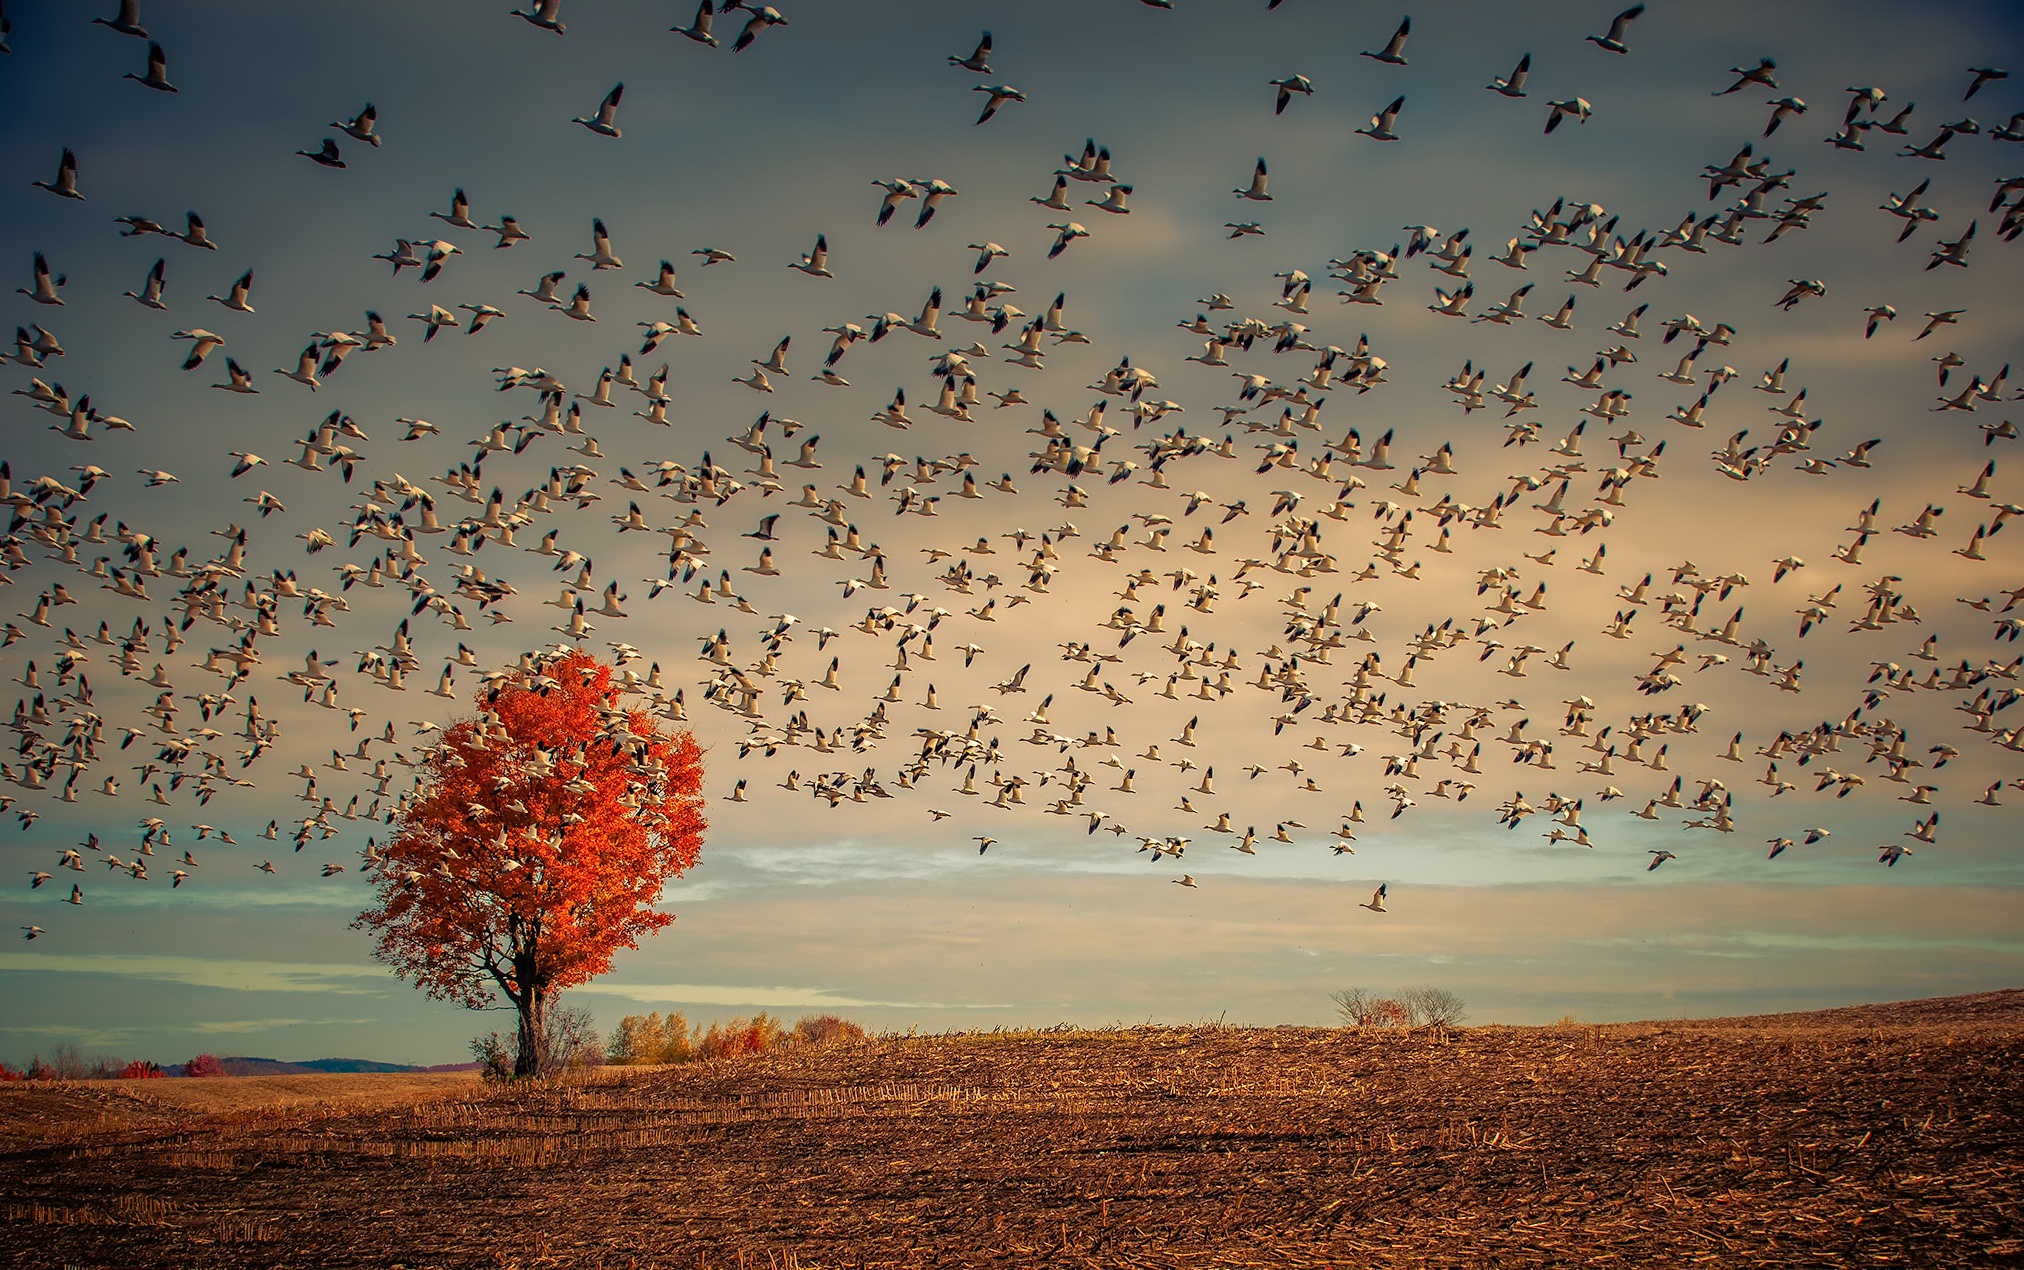 Flock of birds. Стая птиц. Птицы улетают. Птицы улетают на Юг. Осенние птицы.